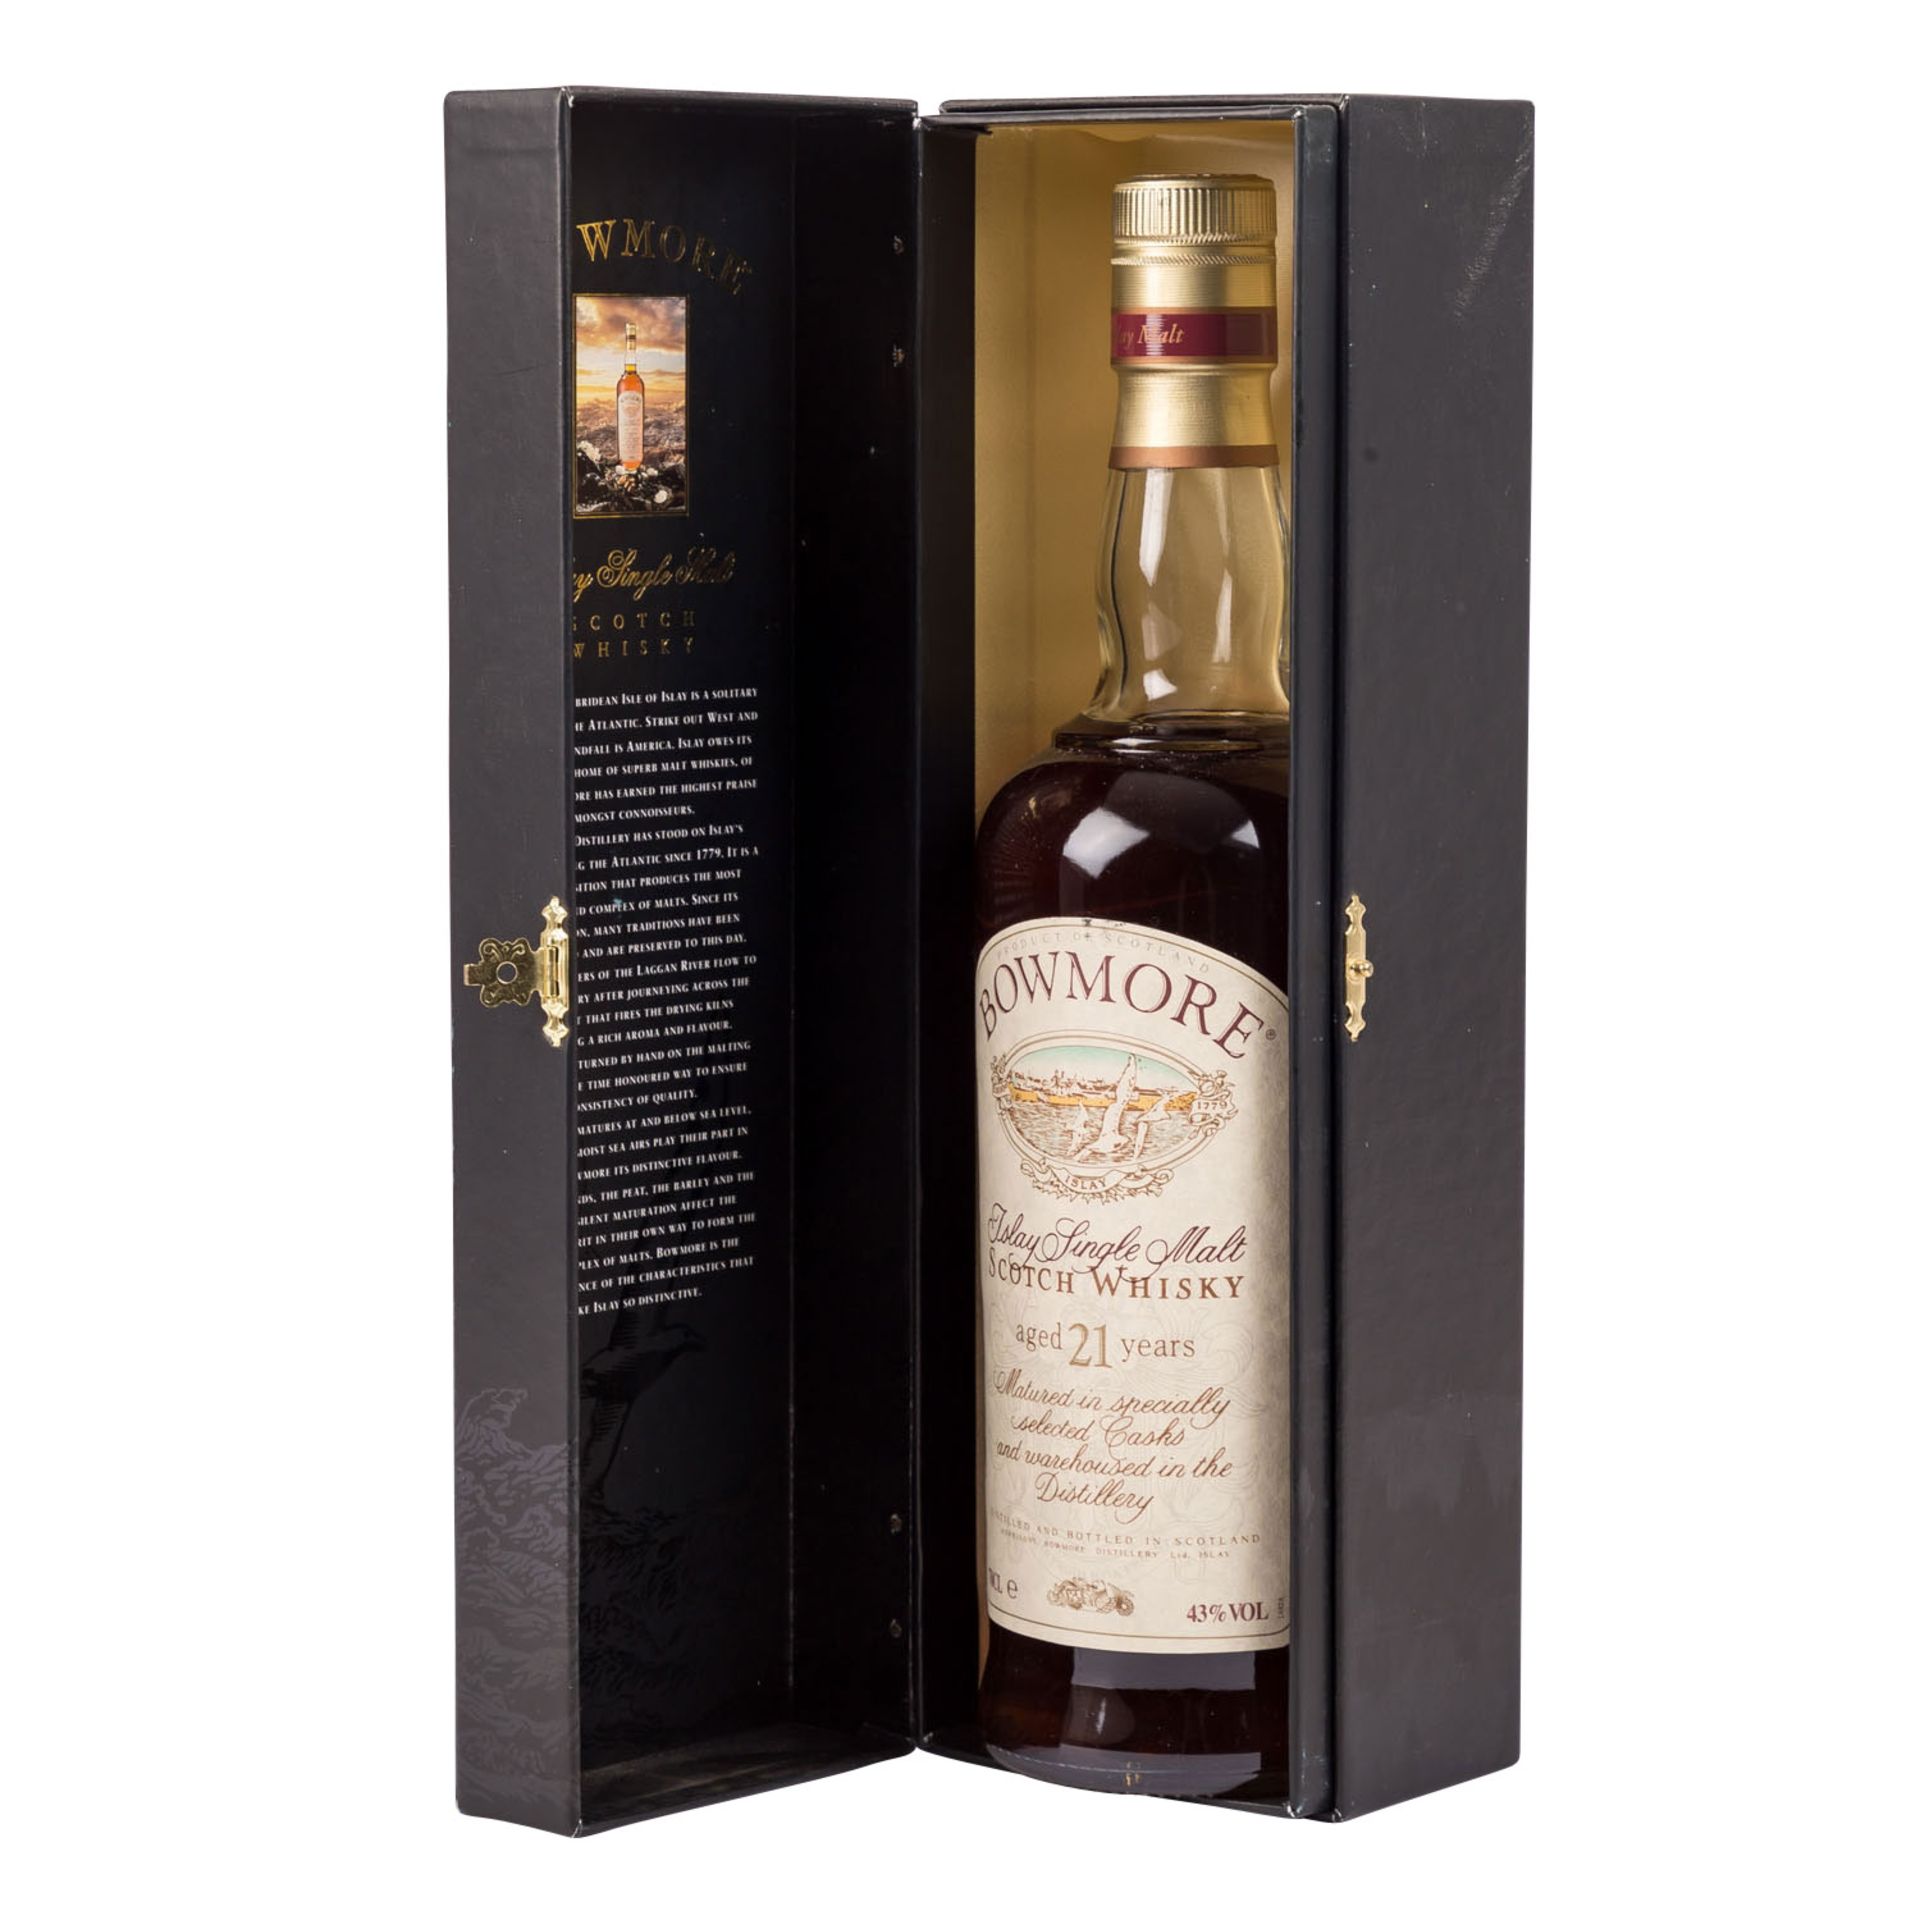 BOWMORE Single Malt Scotch Whisky, 21 years - Image 4 of 4